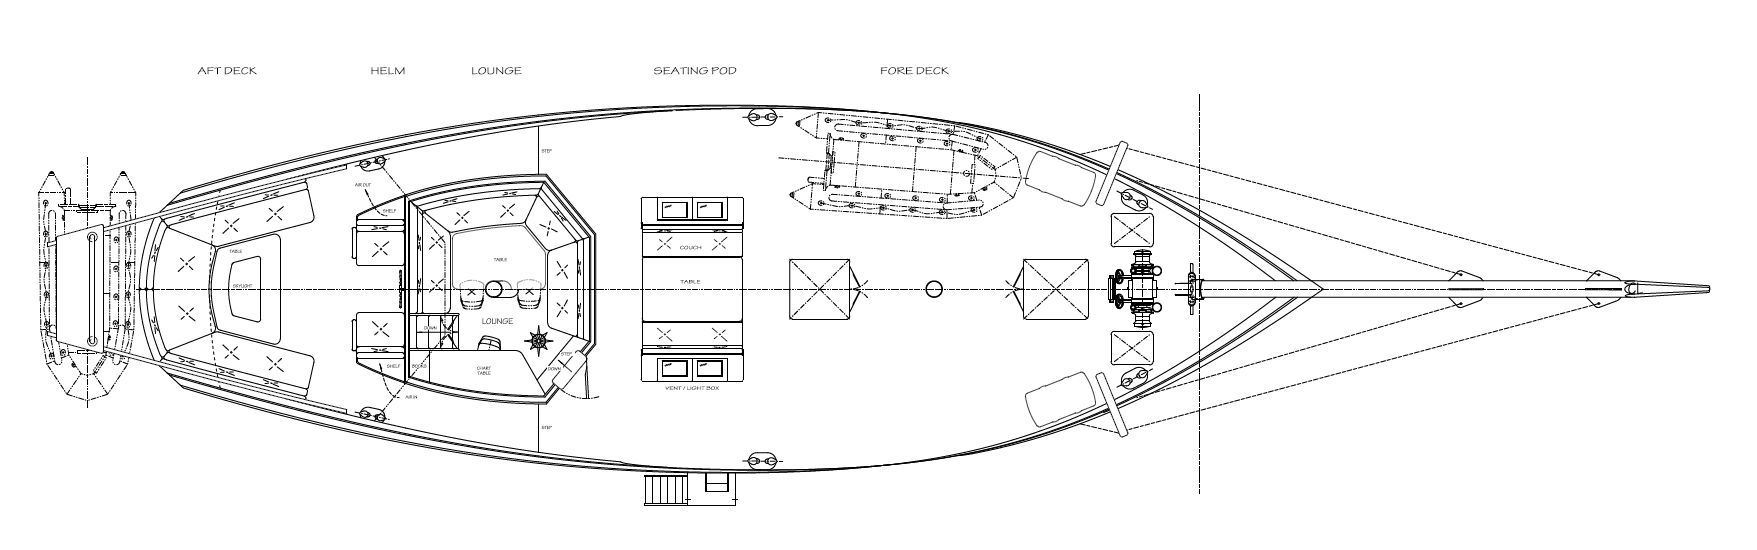 20m Sulawesi Privateer - Kasten Marine Design, Inc.